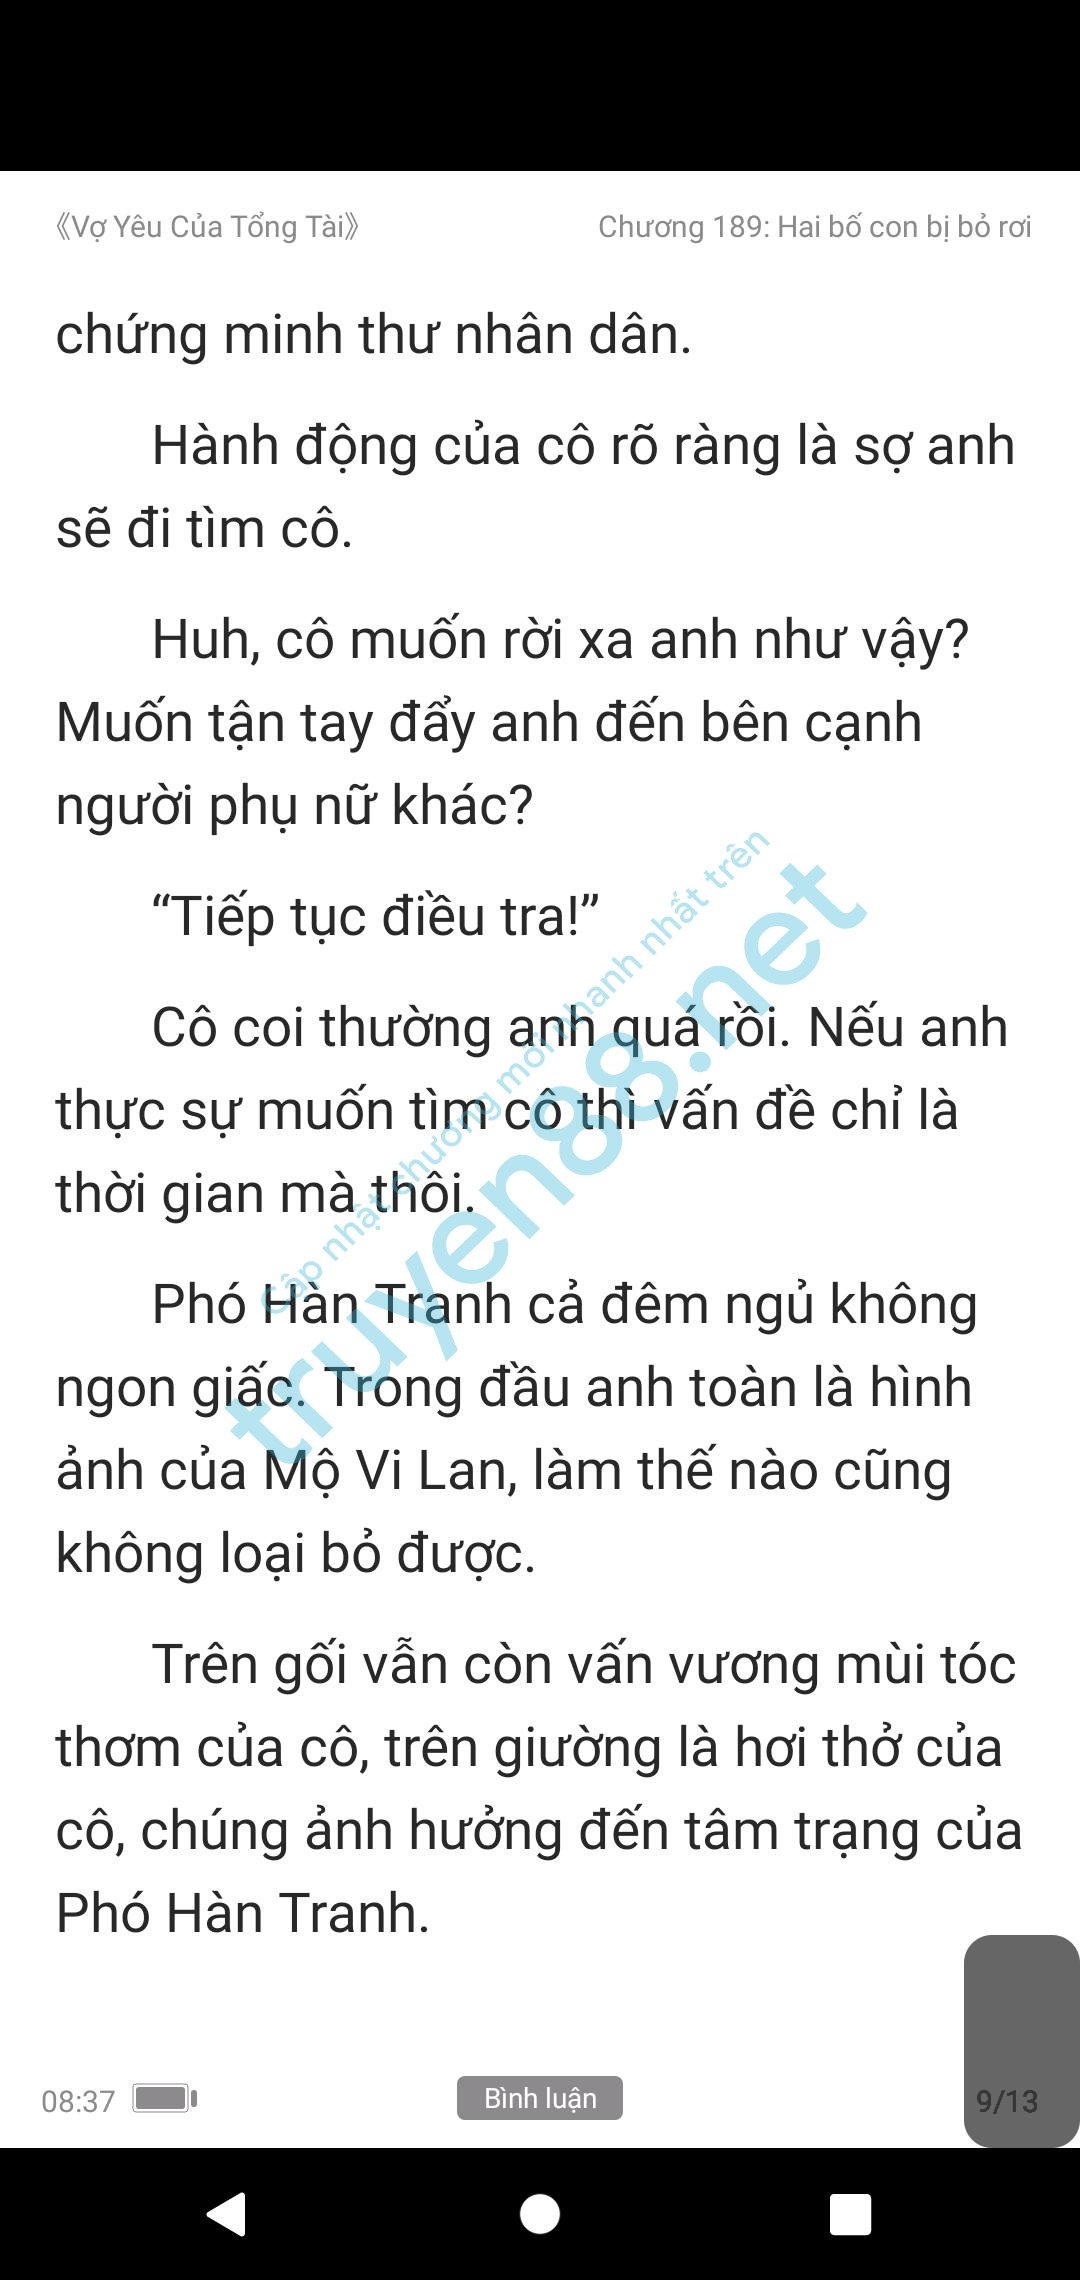 vo-yeu-cua-tong-tai-mo-vi-lan--pho-han-tranh-189-0